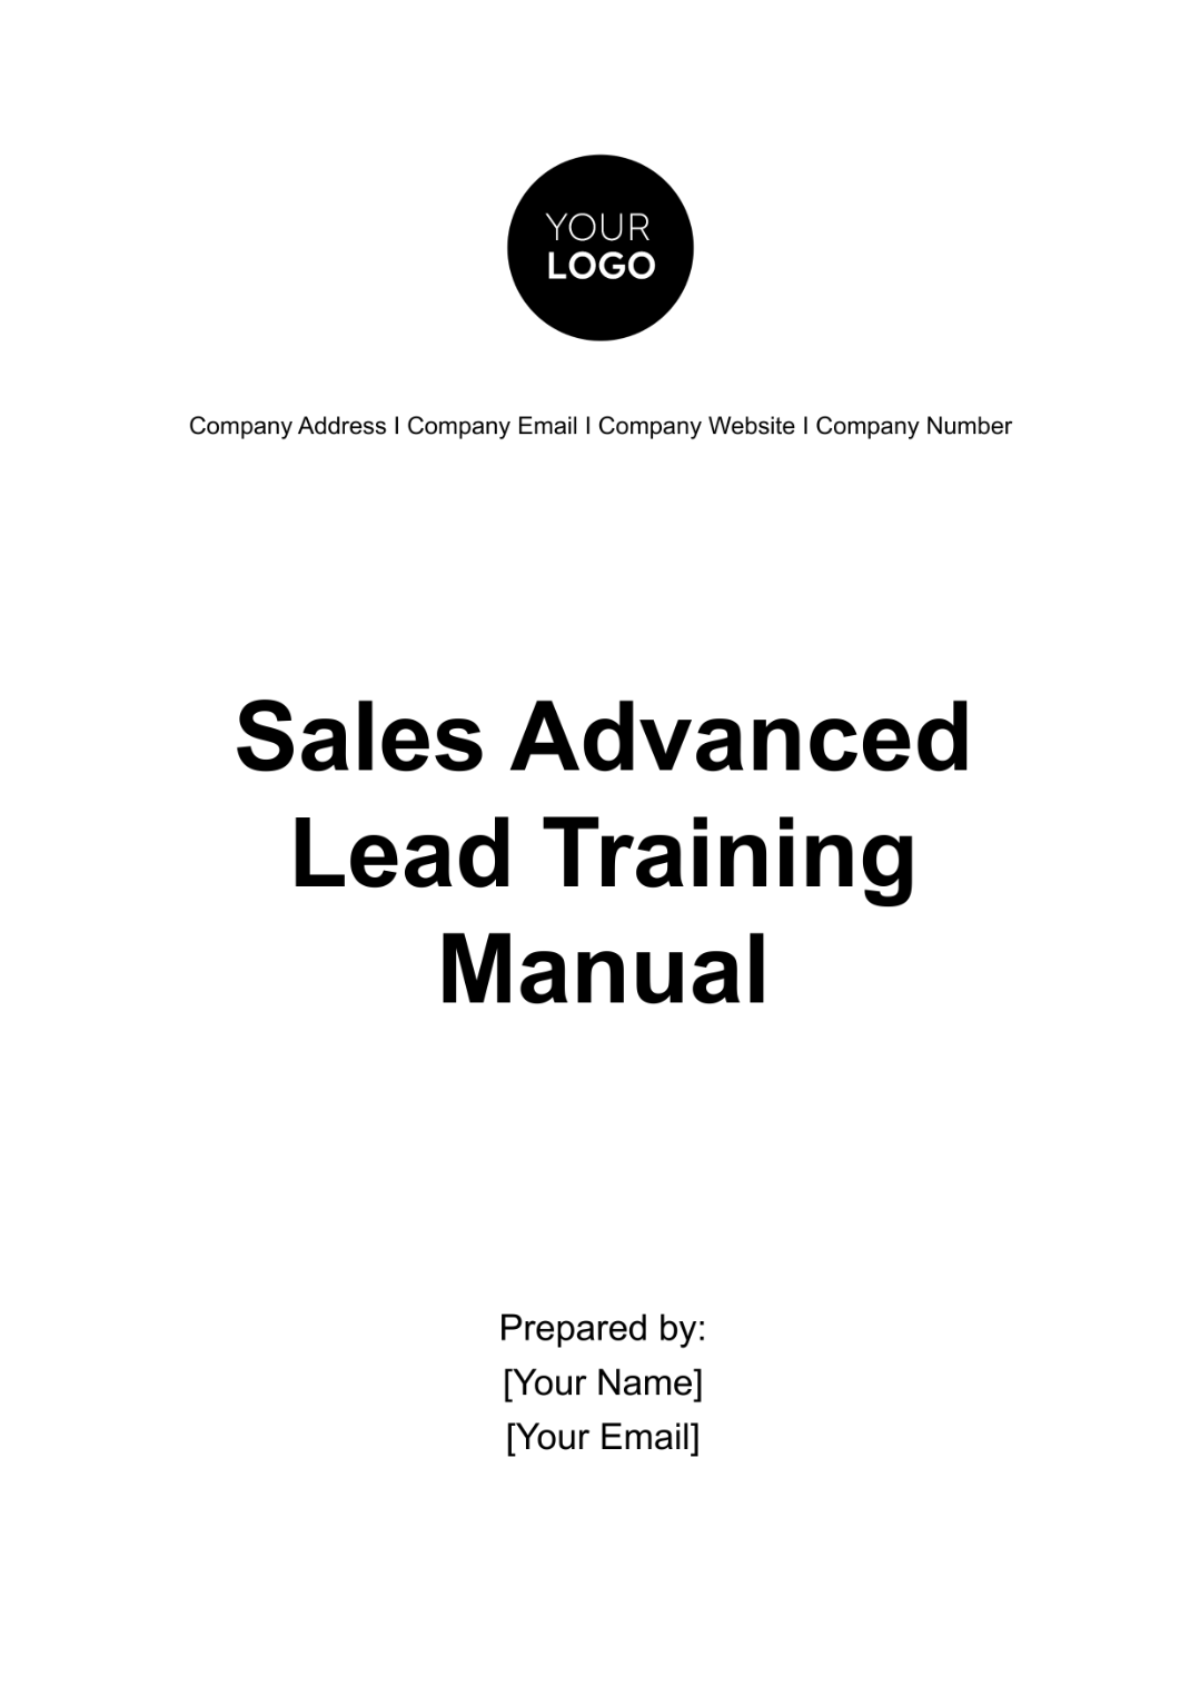 Sales Advanced Lead Training Manual Template